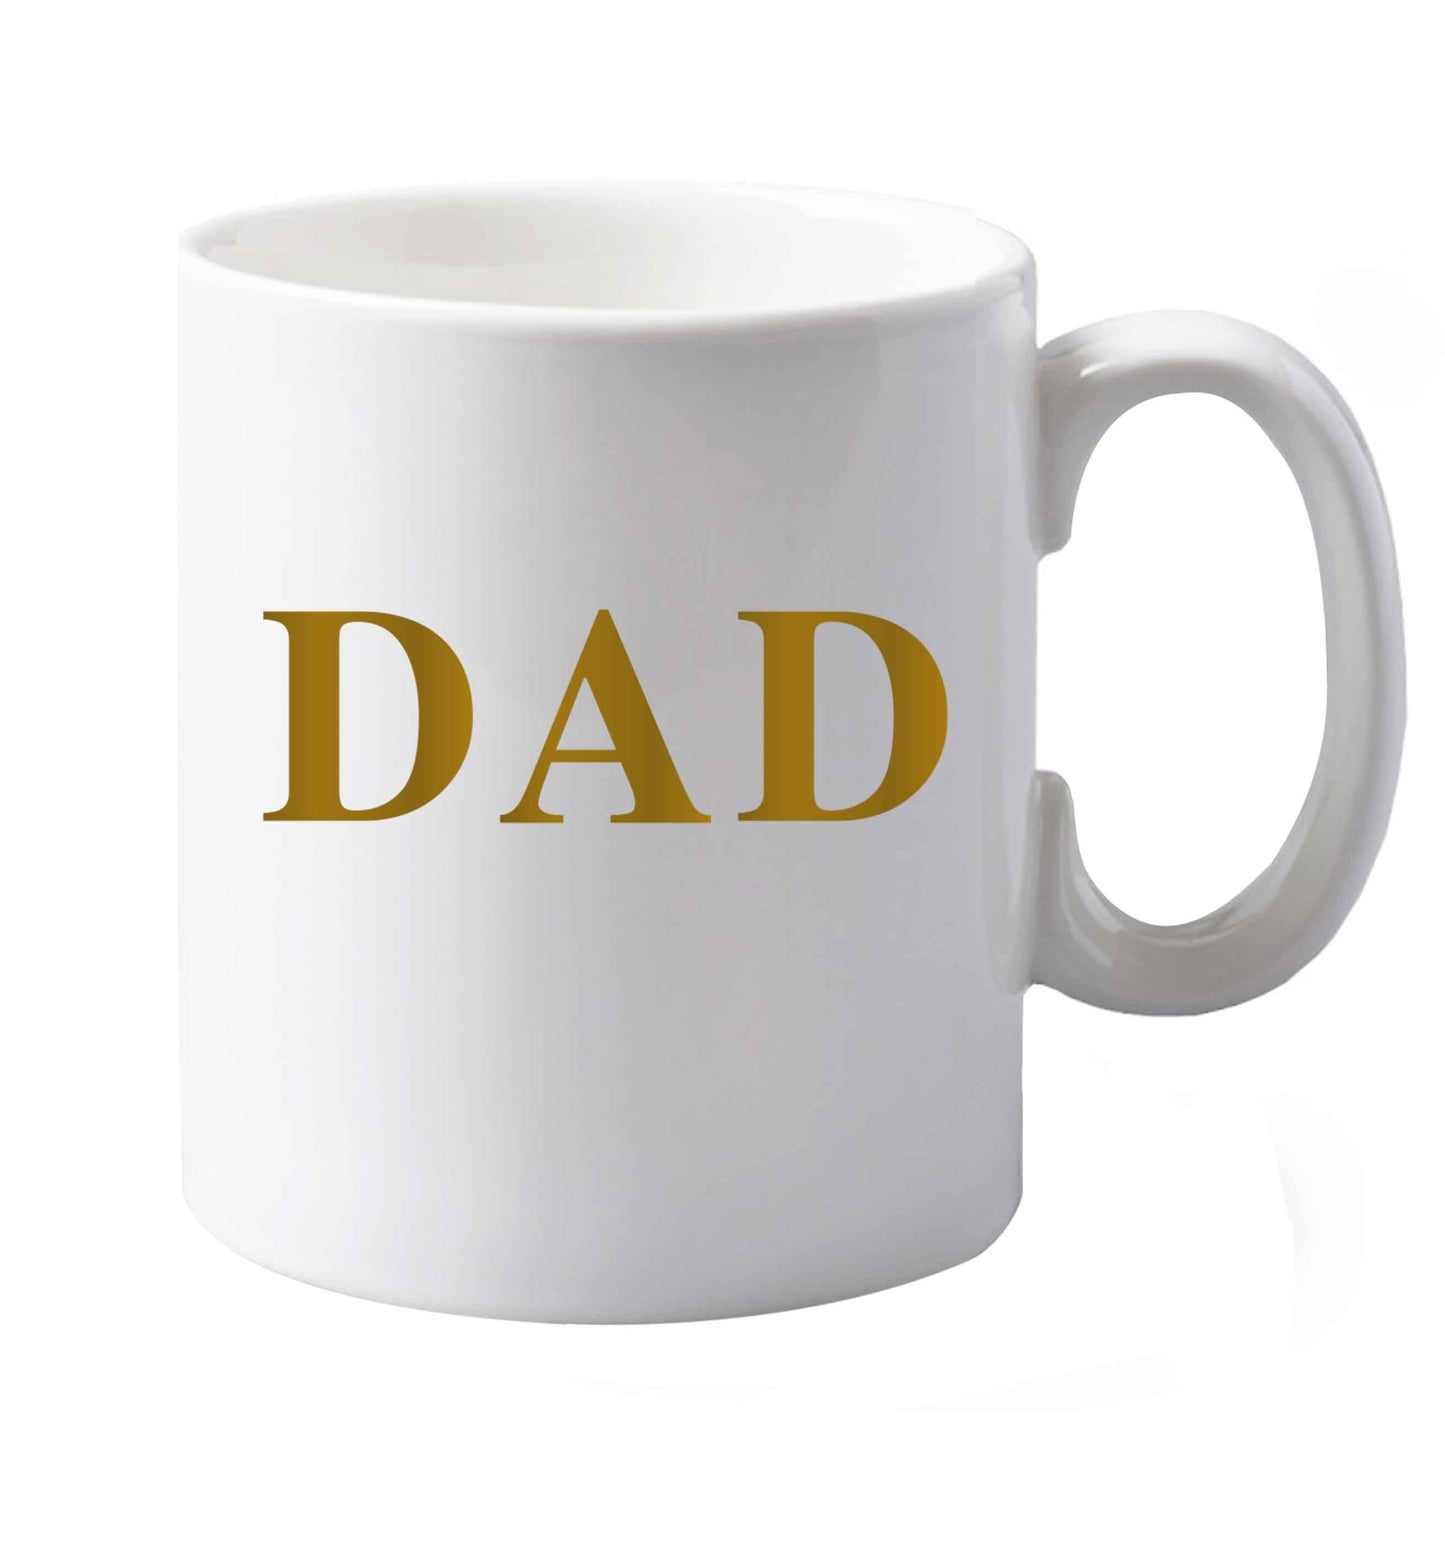 10 oz Dad ceramic mug both sides